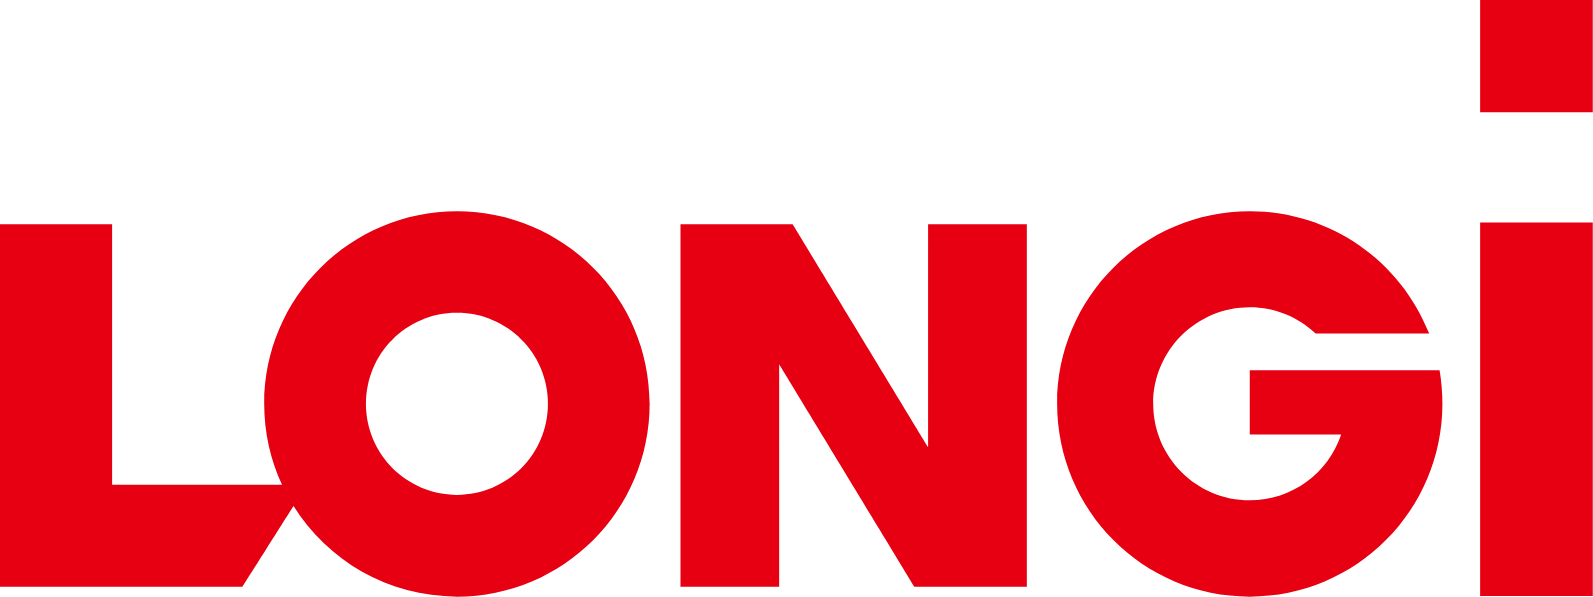 Logo Longi